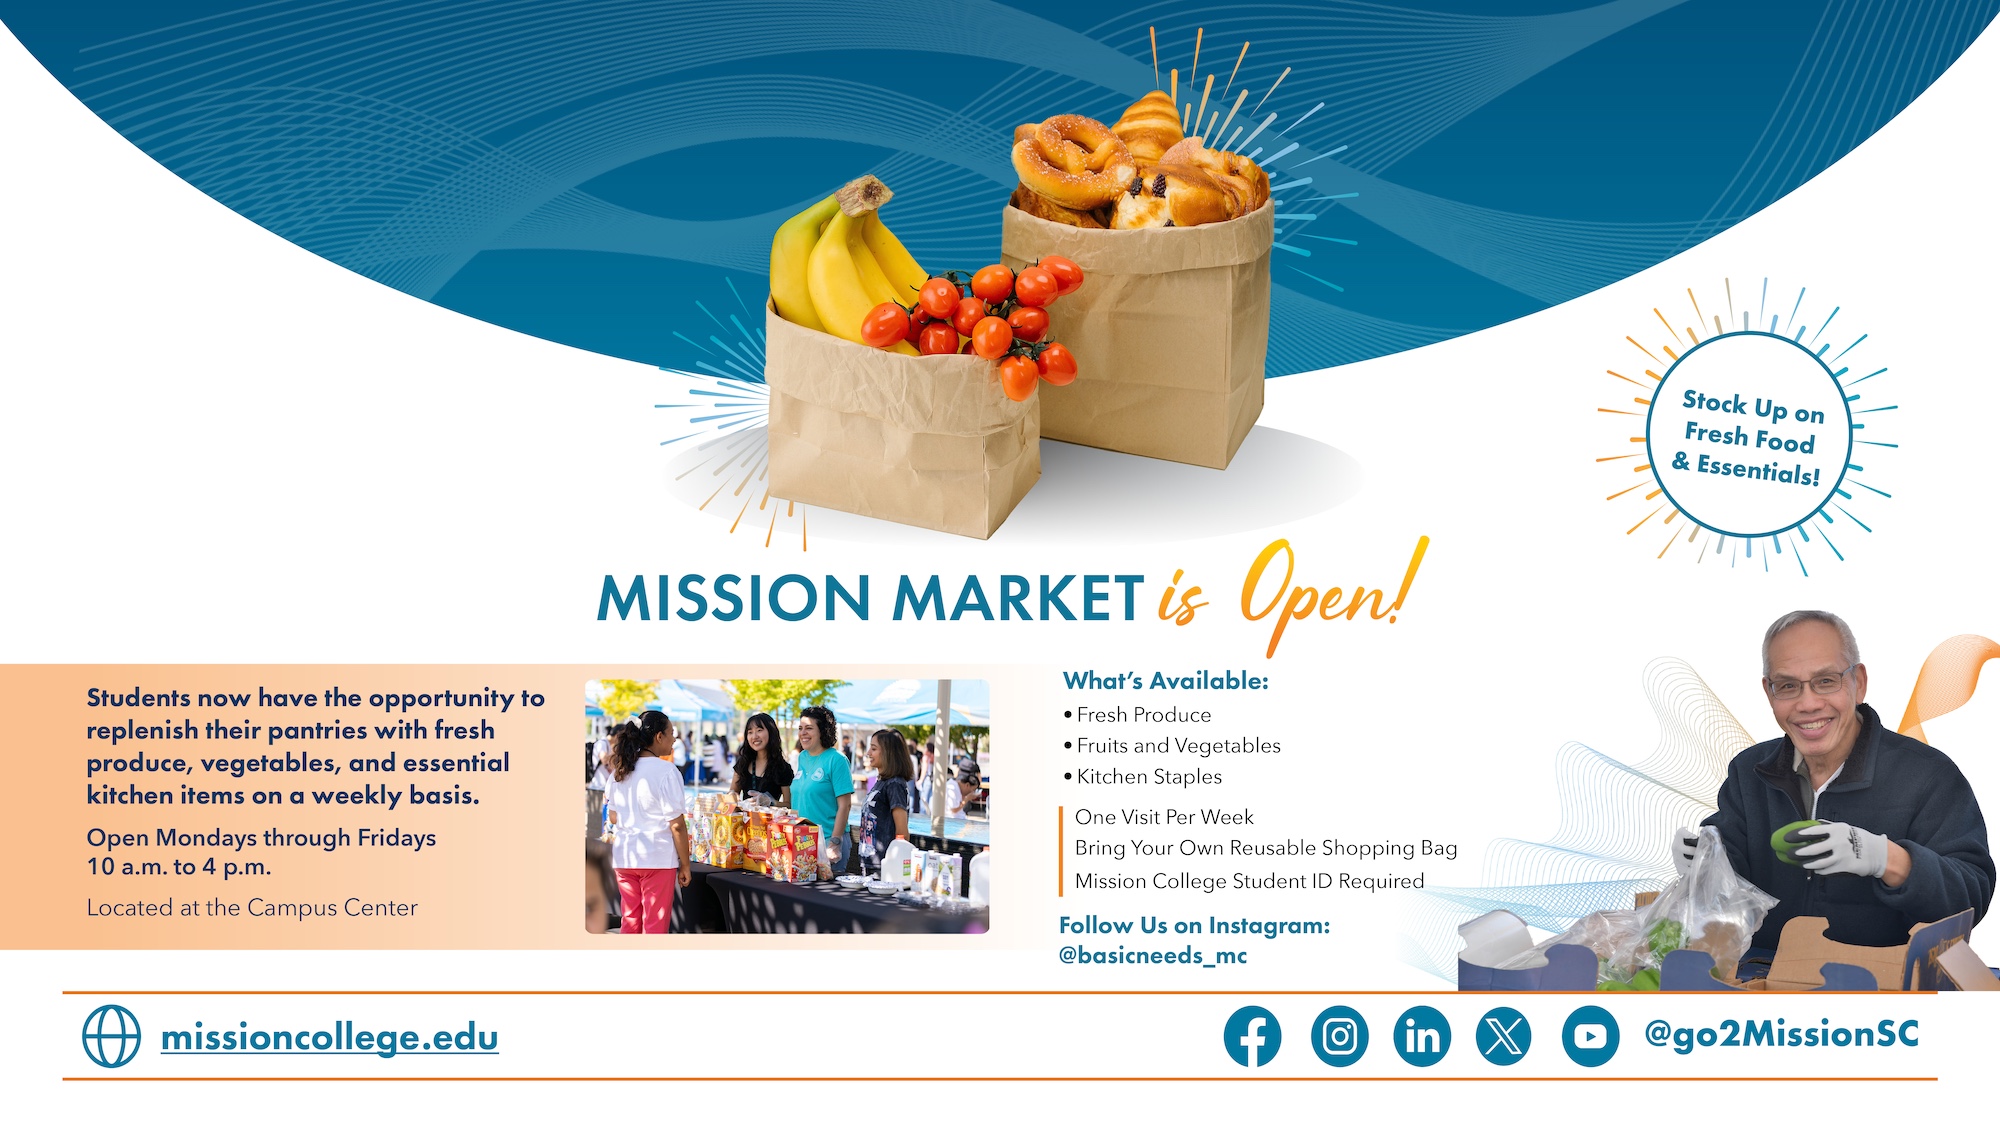 Mission Market is open!